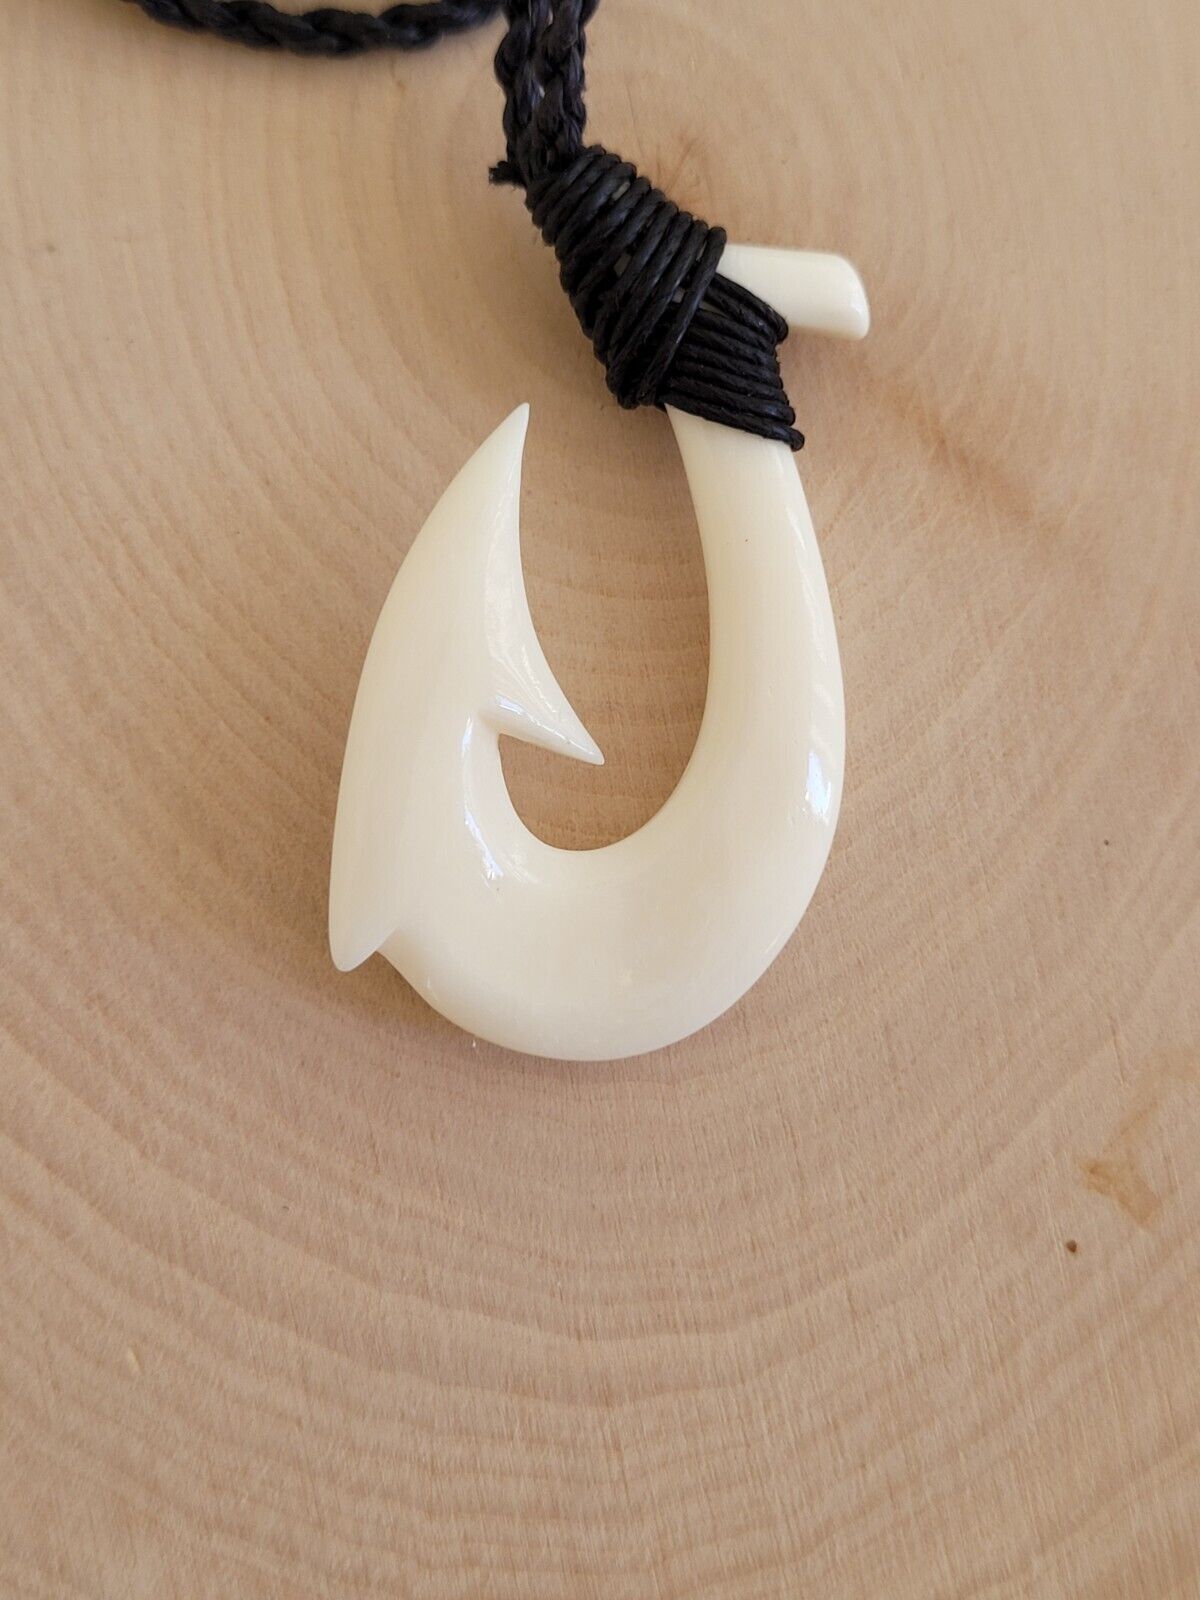 Hawaiian Buffalo Bone Fish Hook Pendant Adjustable Necklace Choker / Black Cord